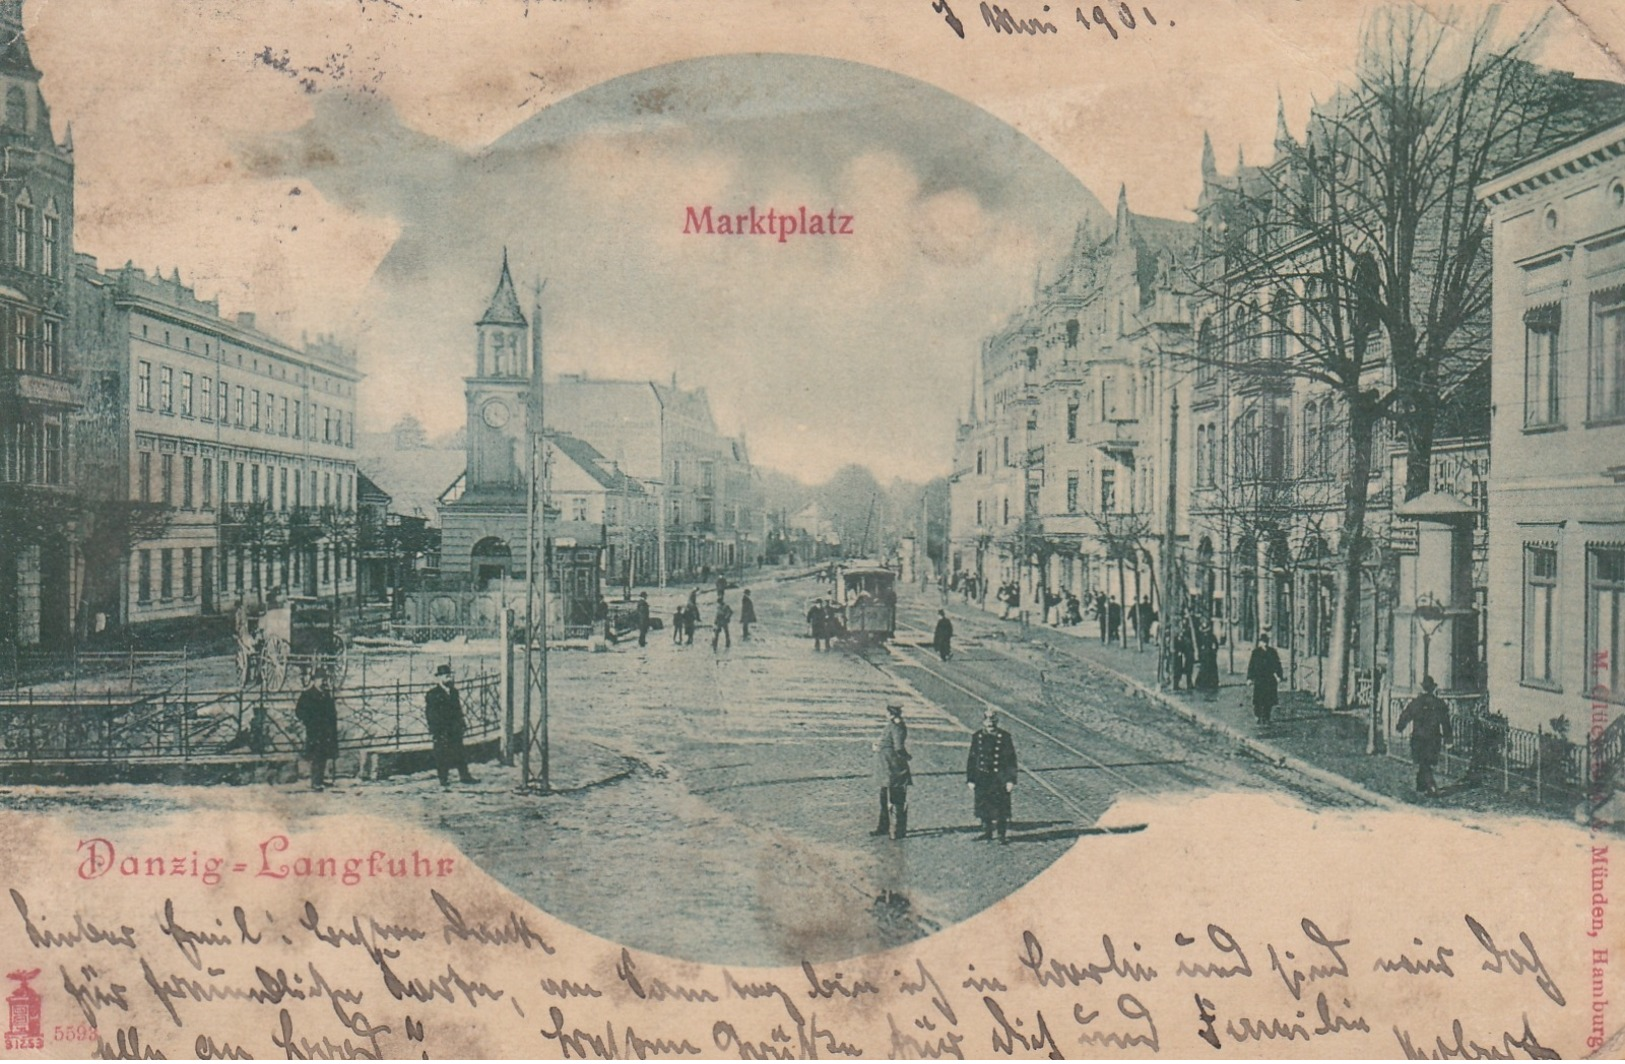 Danzig, Germany (Now Poland), 1901 ; Marktplatz - Poland